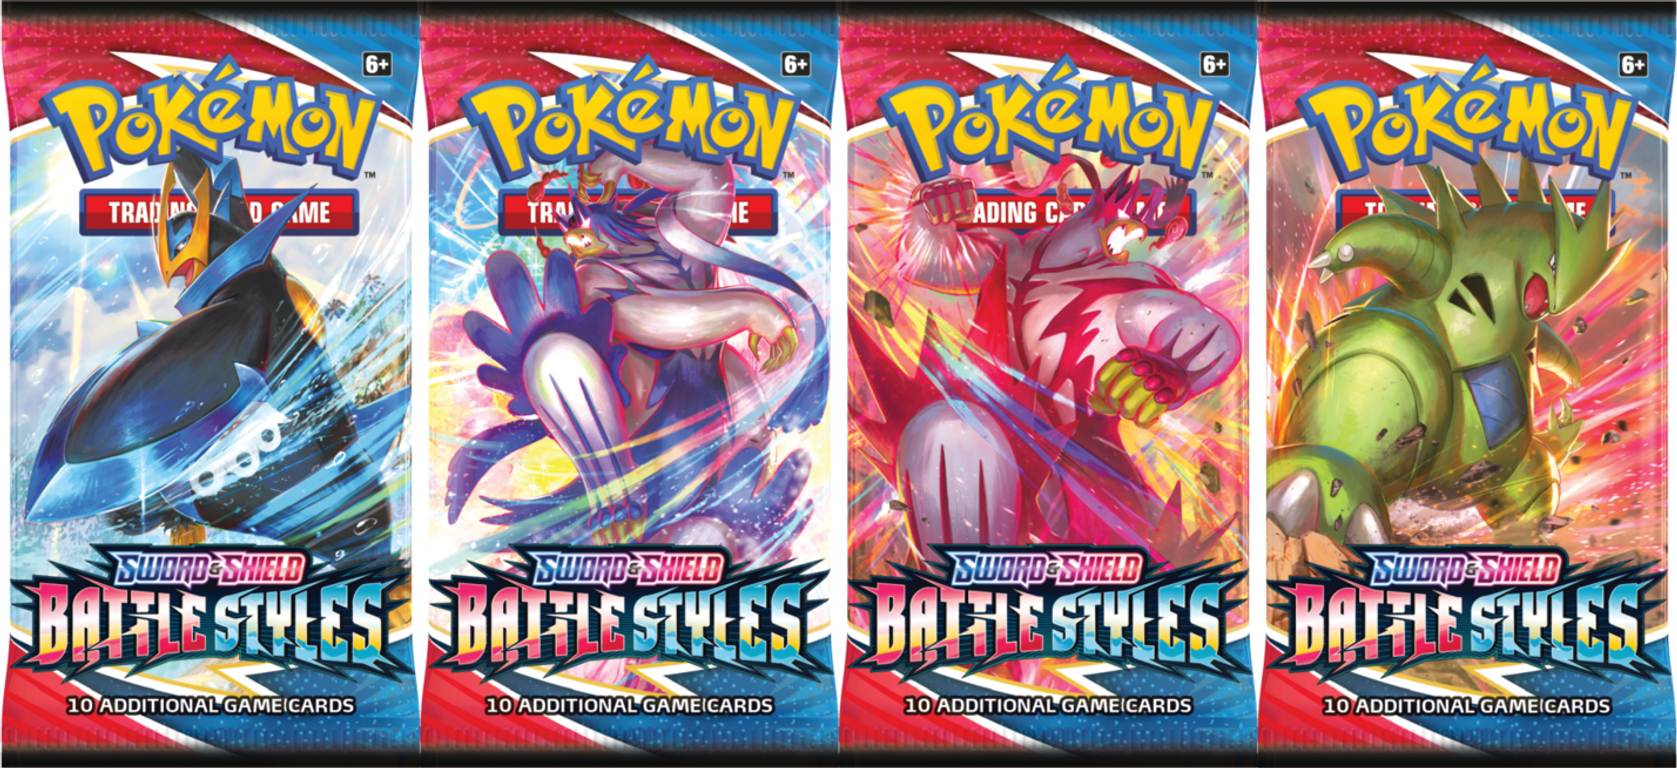 Pokémon TCG: Sword & Shield - Battle Styles Booster Pack caja